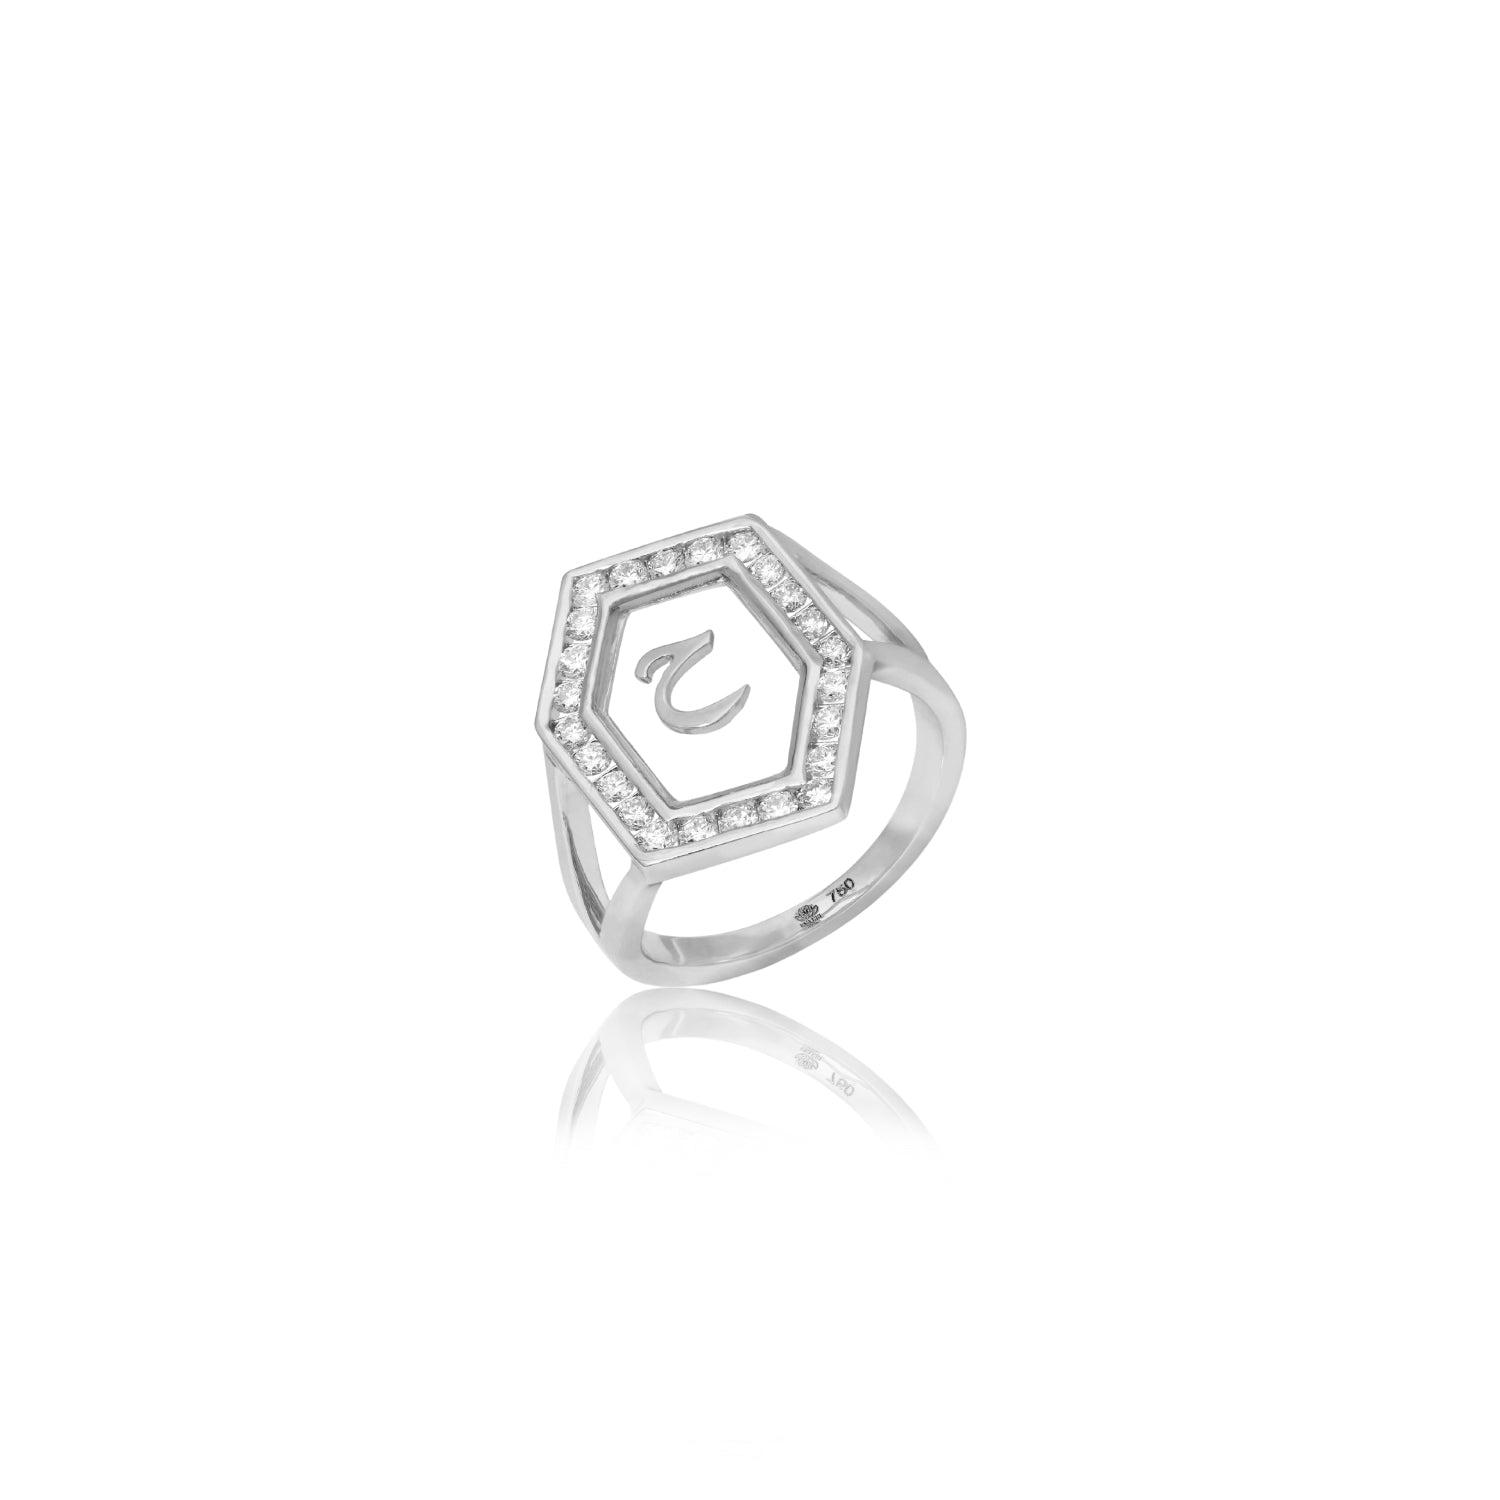 Qamoos 1.0 Letter ح Diamond Ring in White Gold